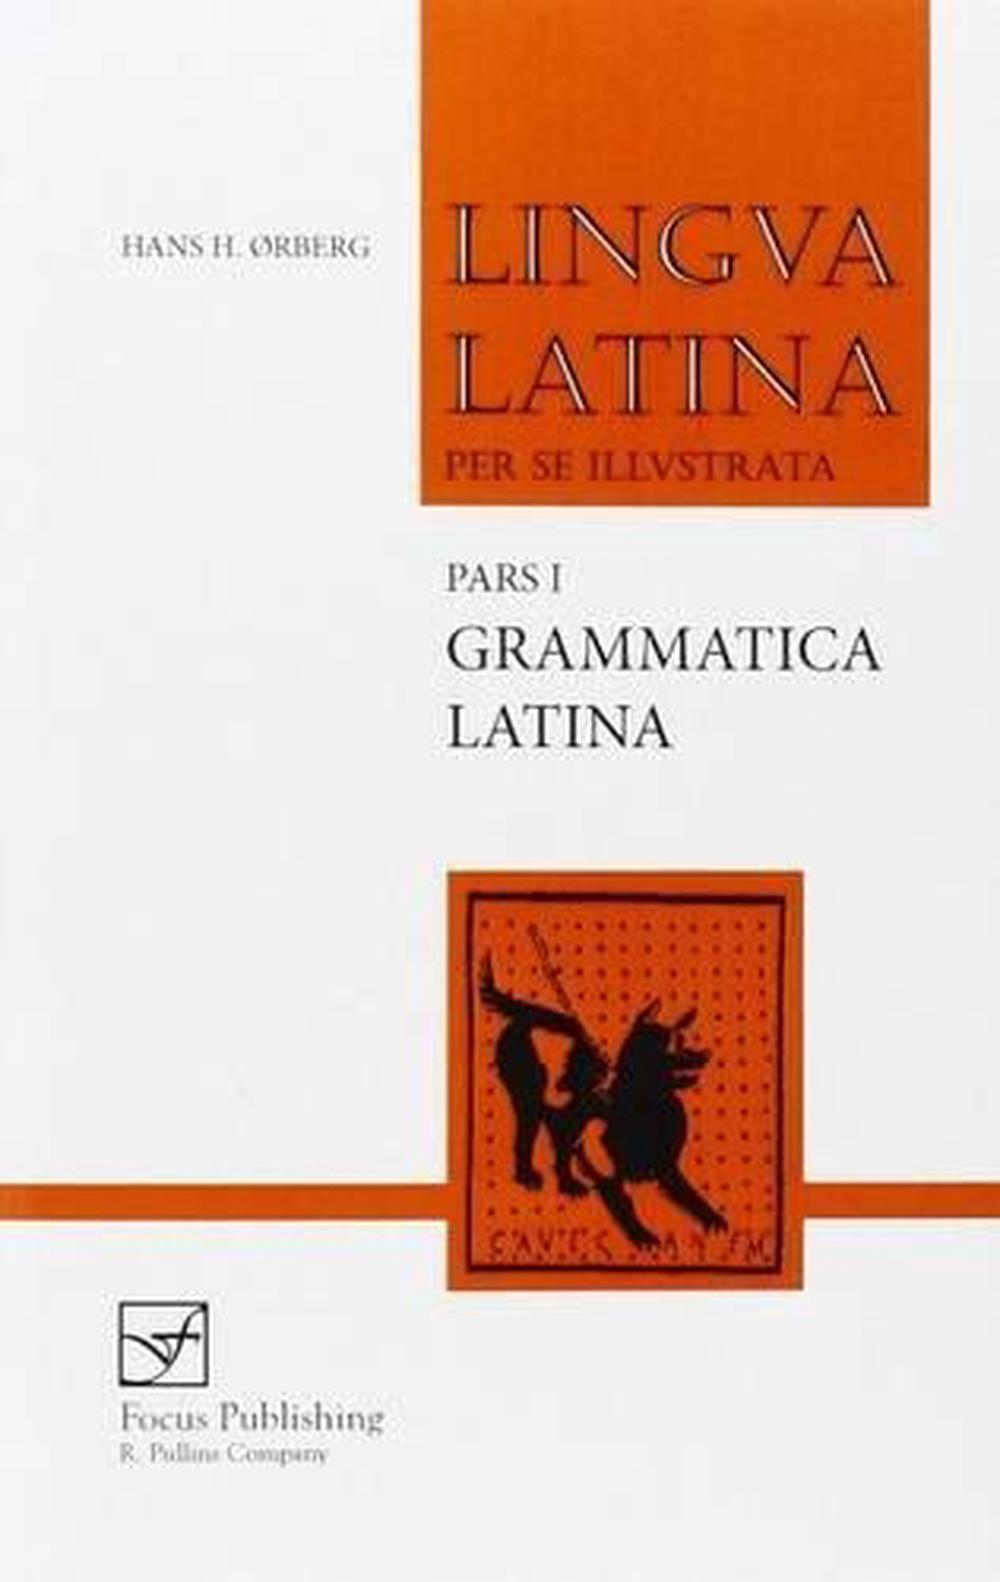 hans orberg lingua latina per se illustrata